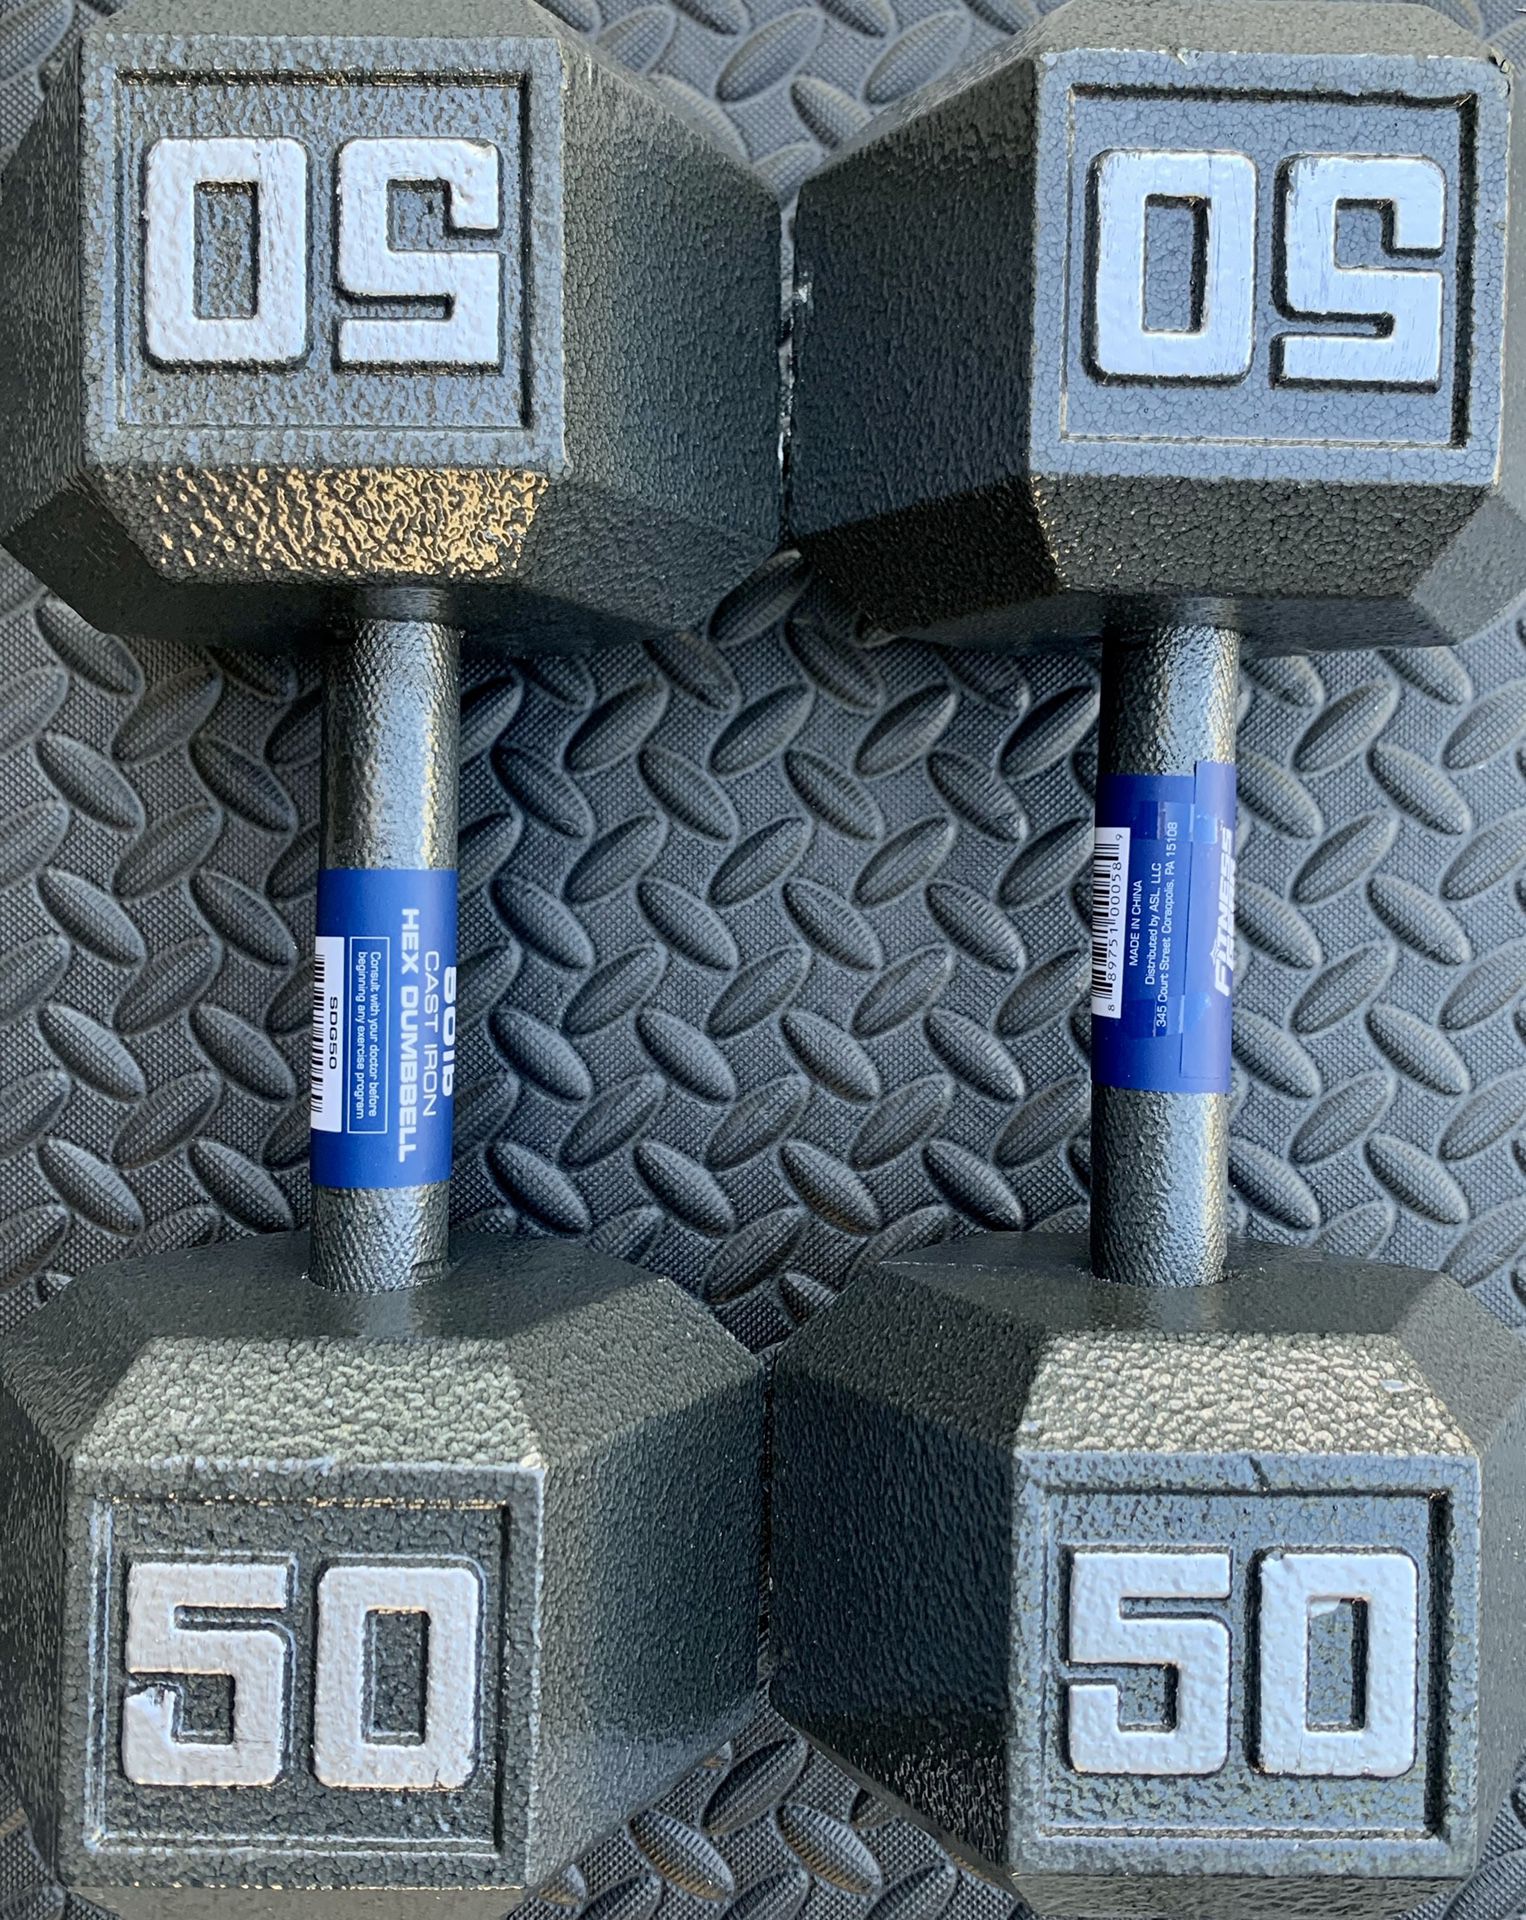 50lb dumbbells- metal dumbbells - weightlifting